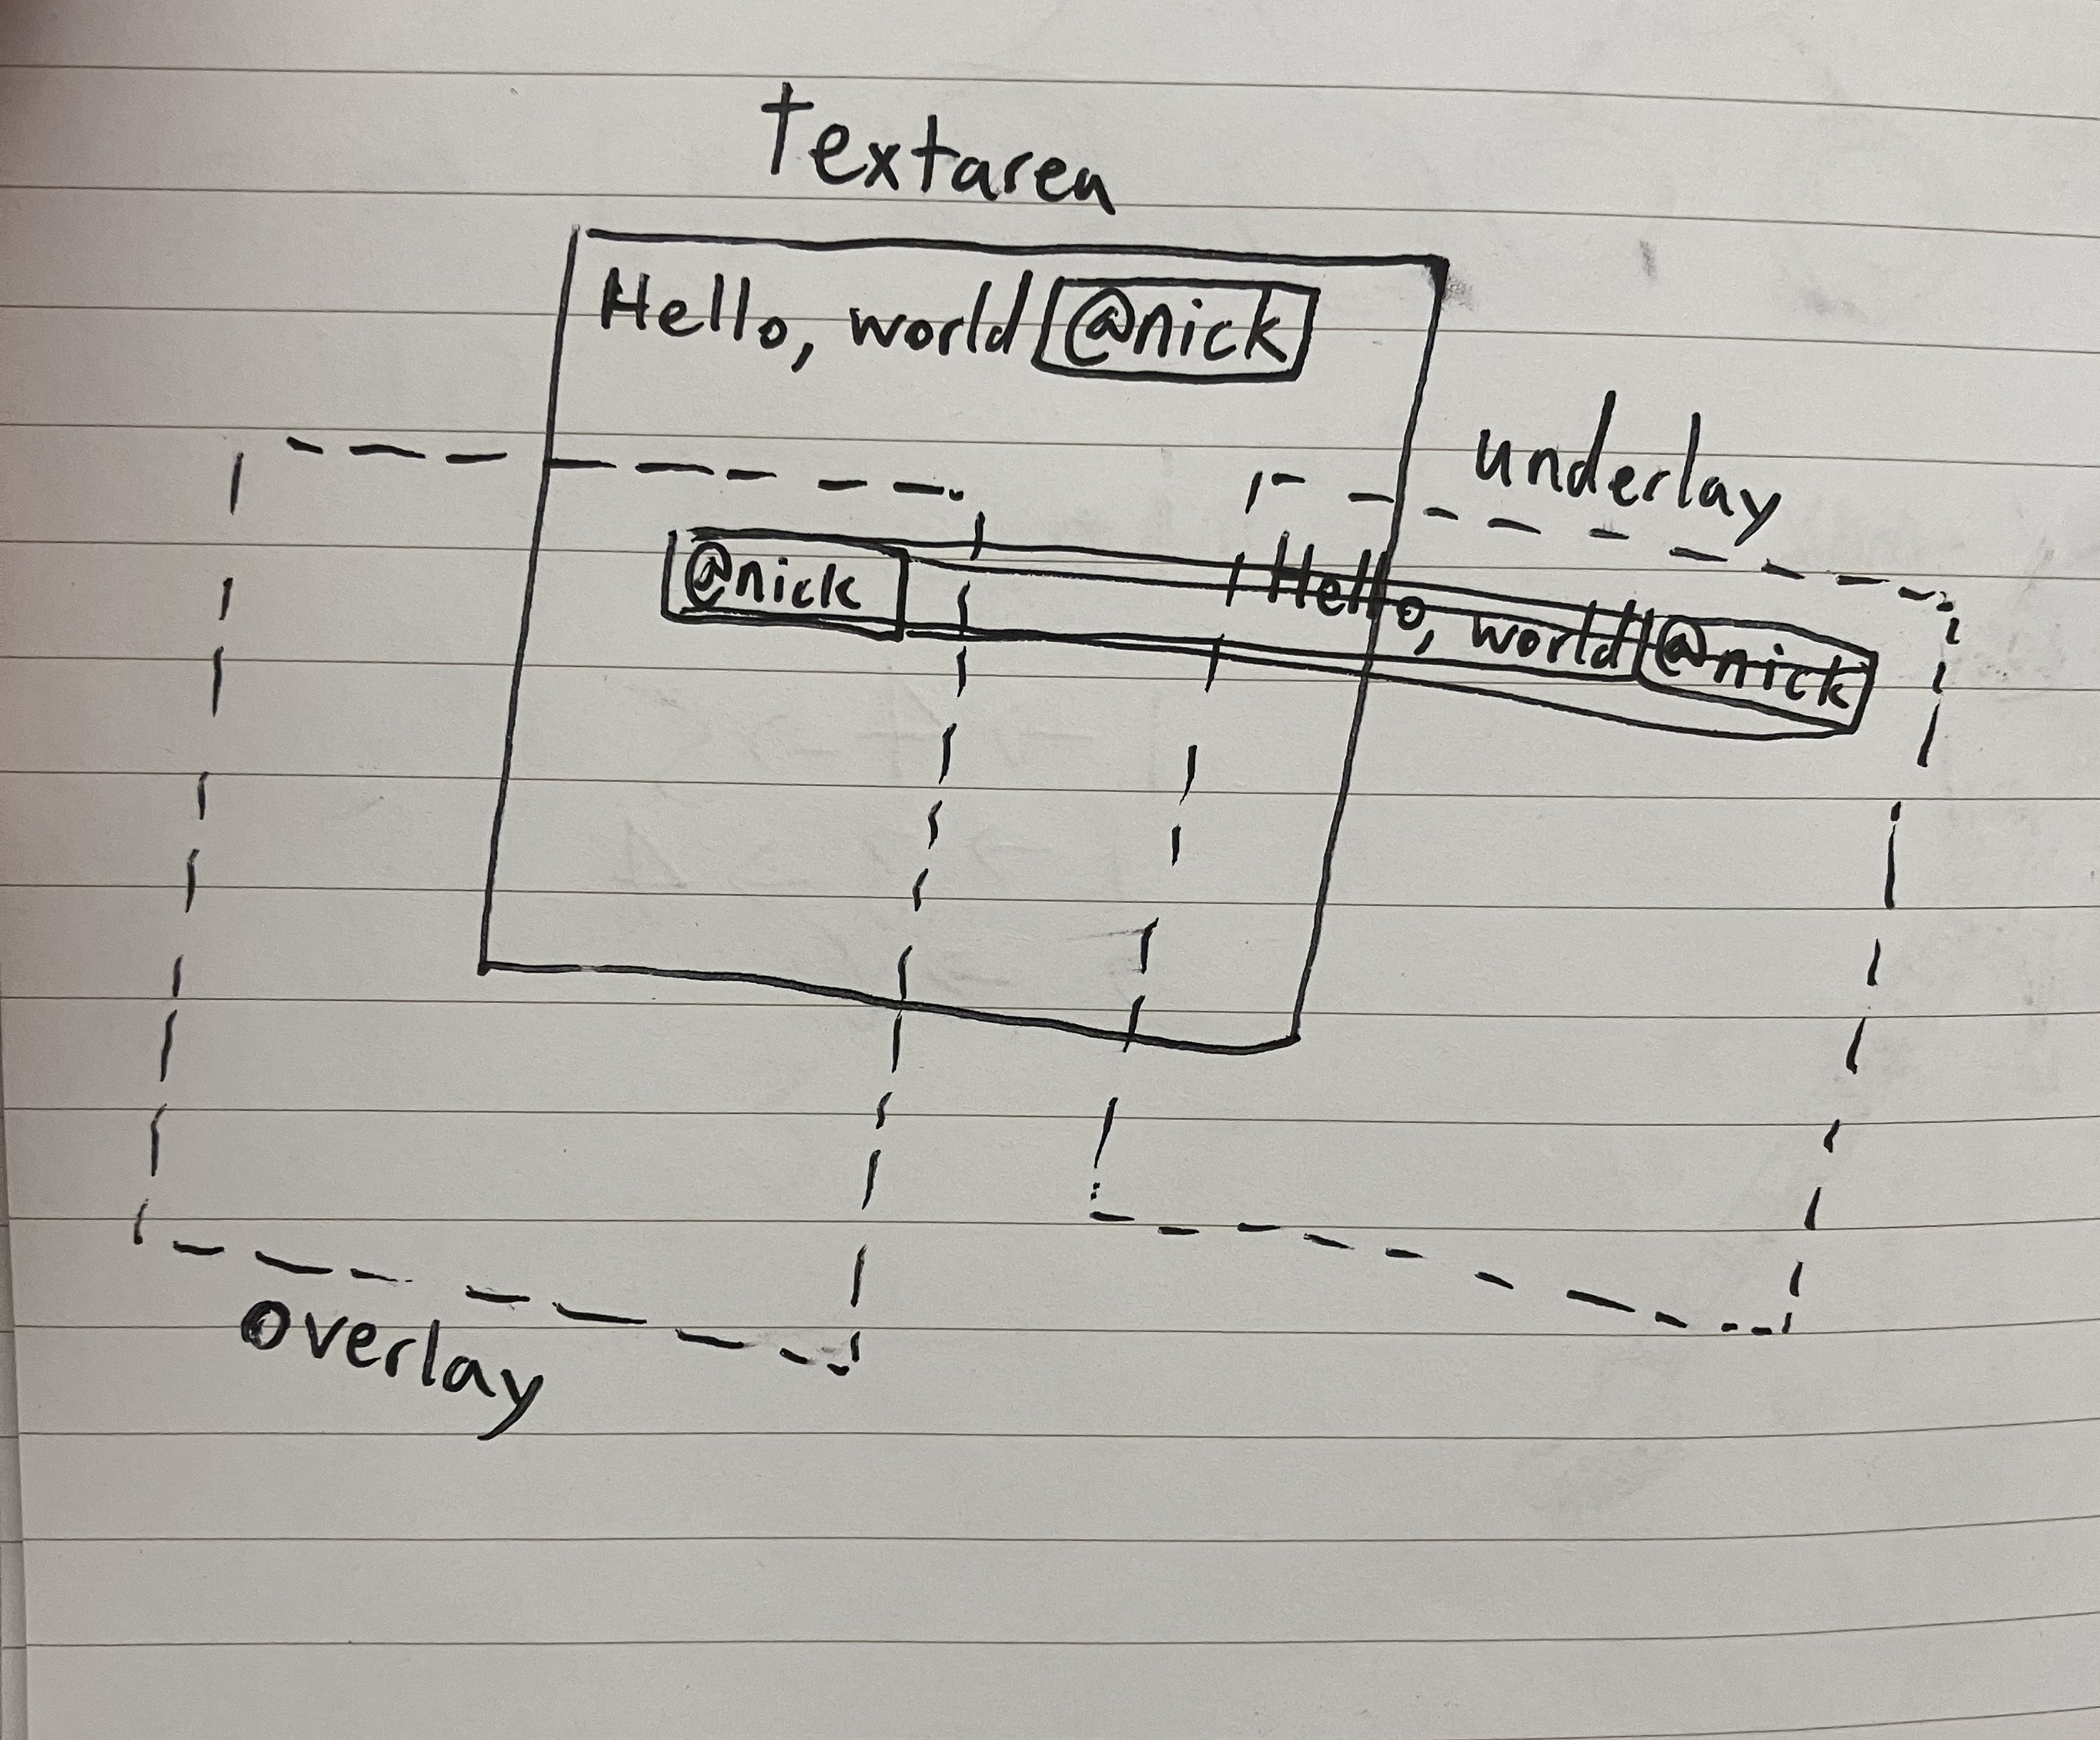 An visualization of the underlay, textarea, overlay setup.